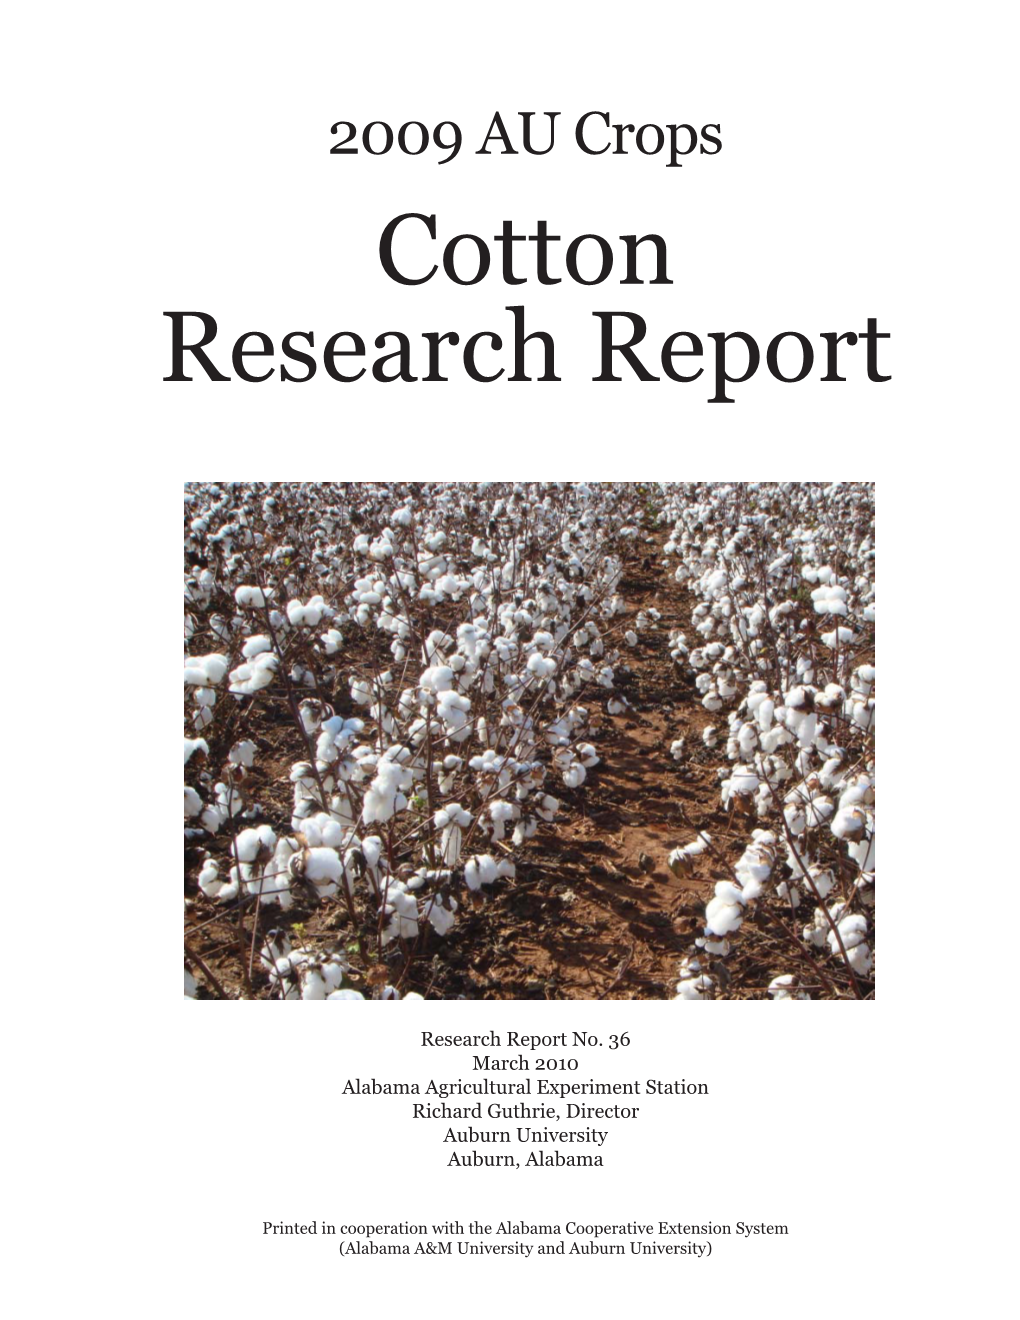 2009 AU Crops Cotton Research Report